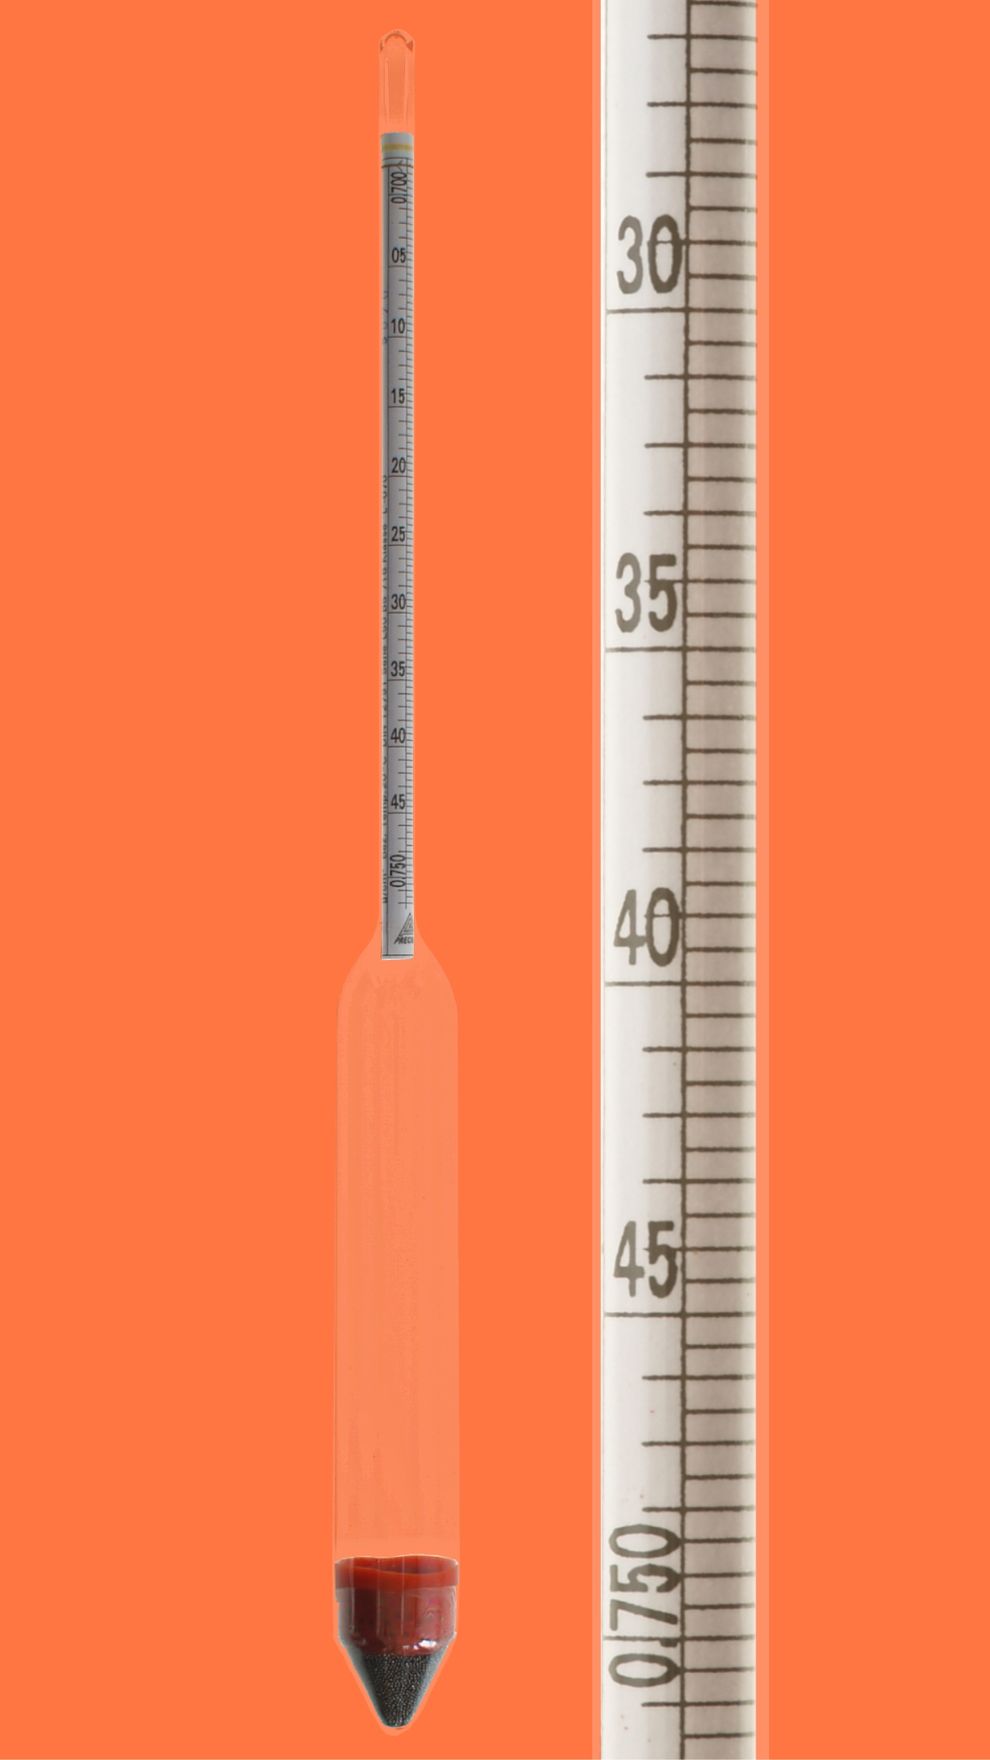 Aräometer, DIN 12791, L50, 1,65-1,70:0,0005g/cm³, Bezugstemp. 20°C, ohne Thermometer